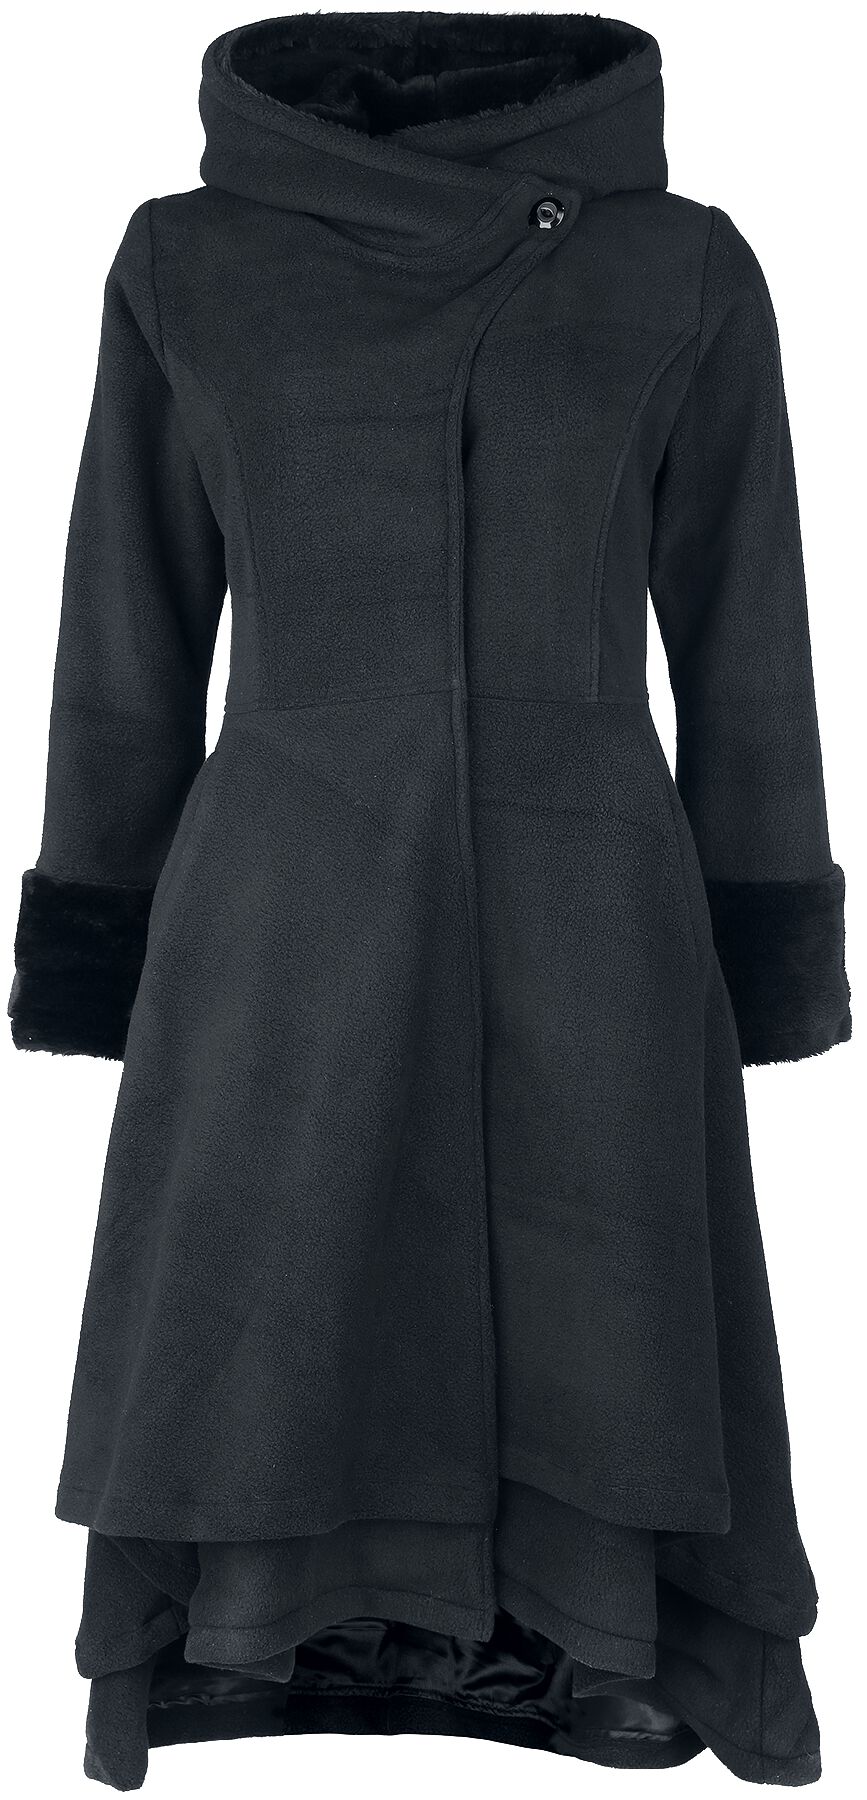 Vixxsin Gloaming Coat Mantel schwarz in S